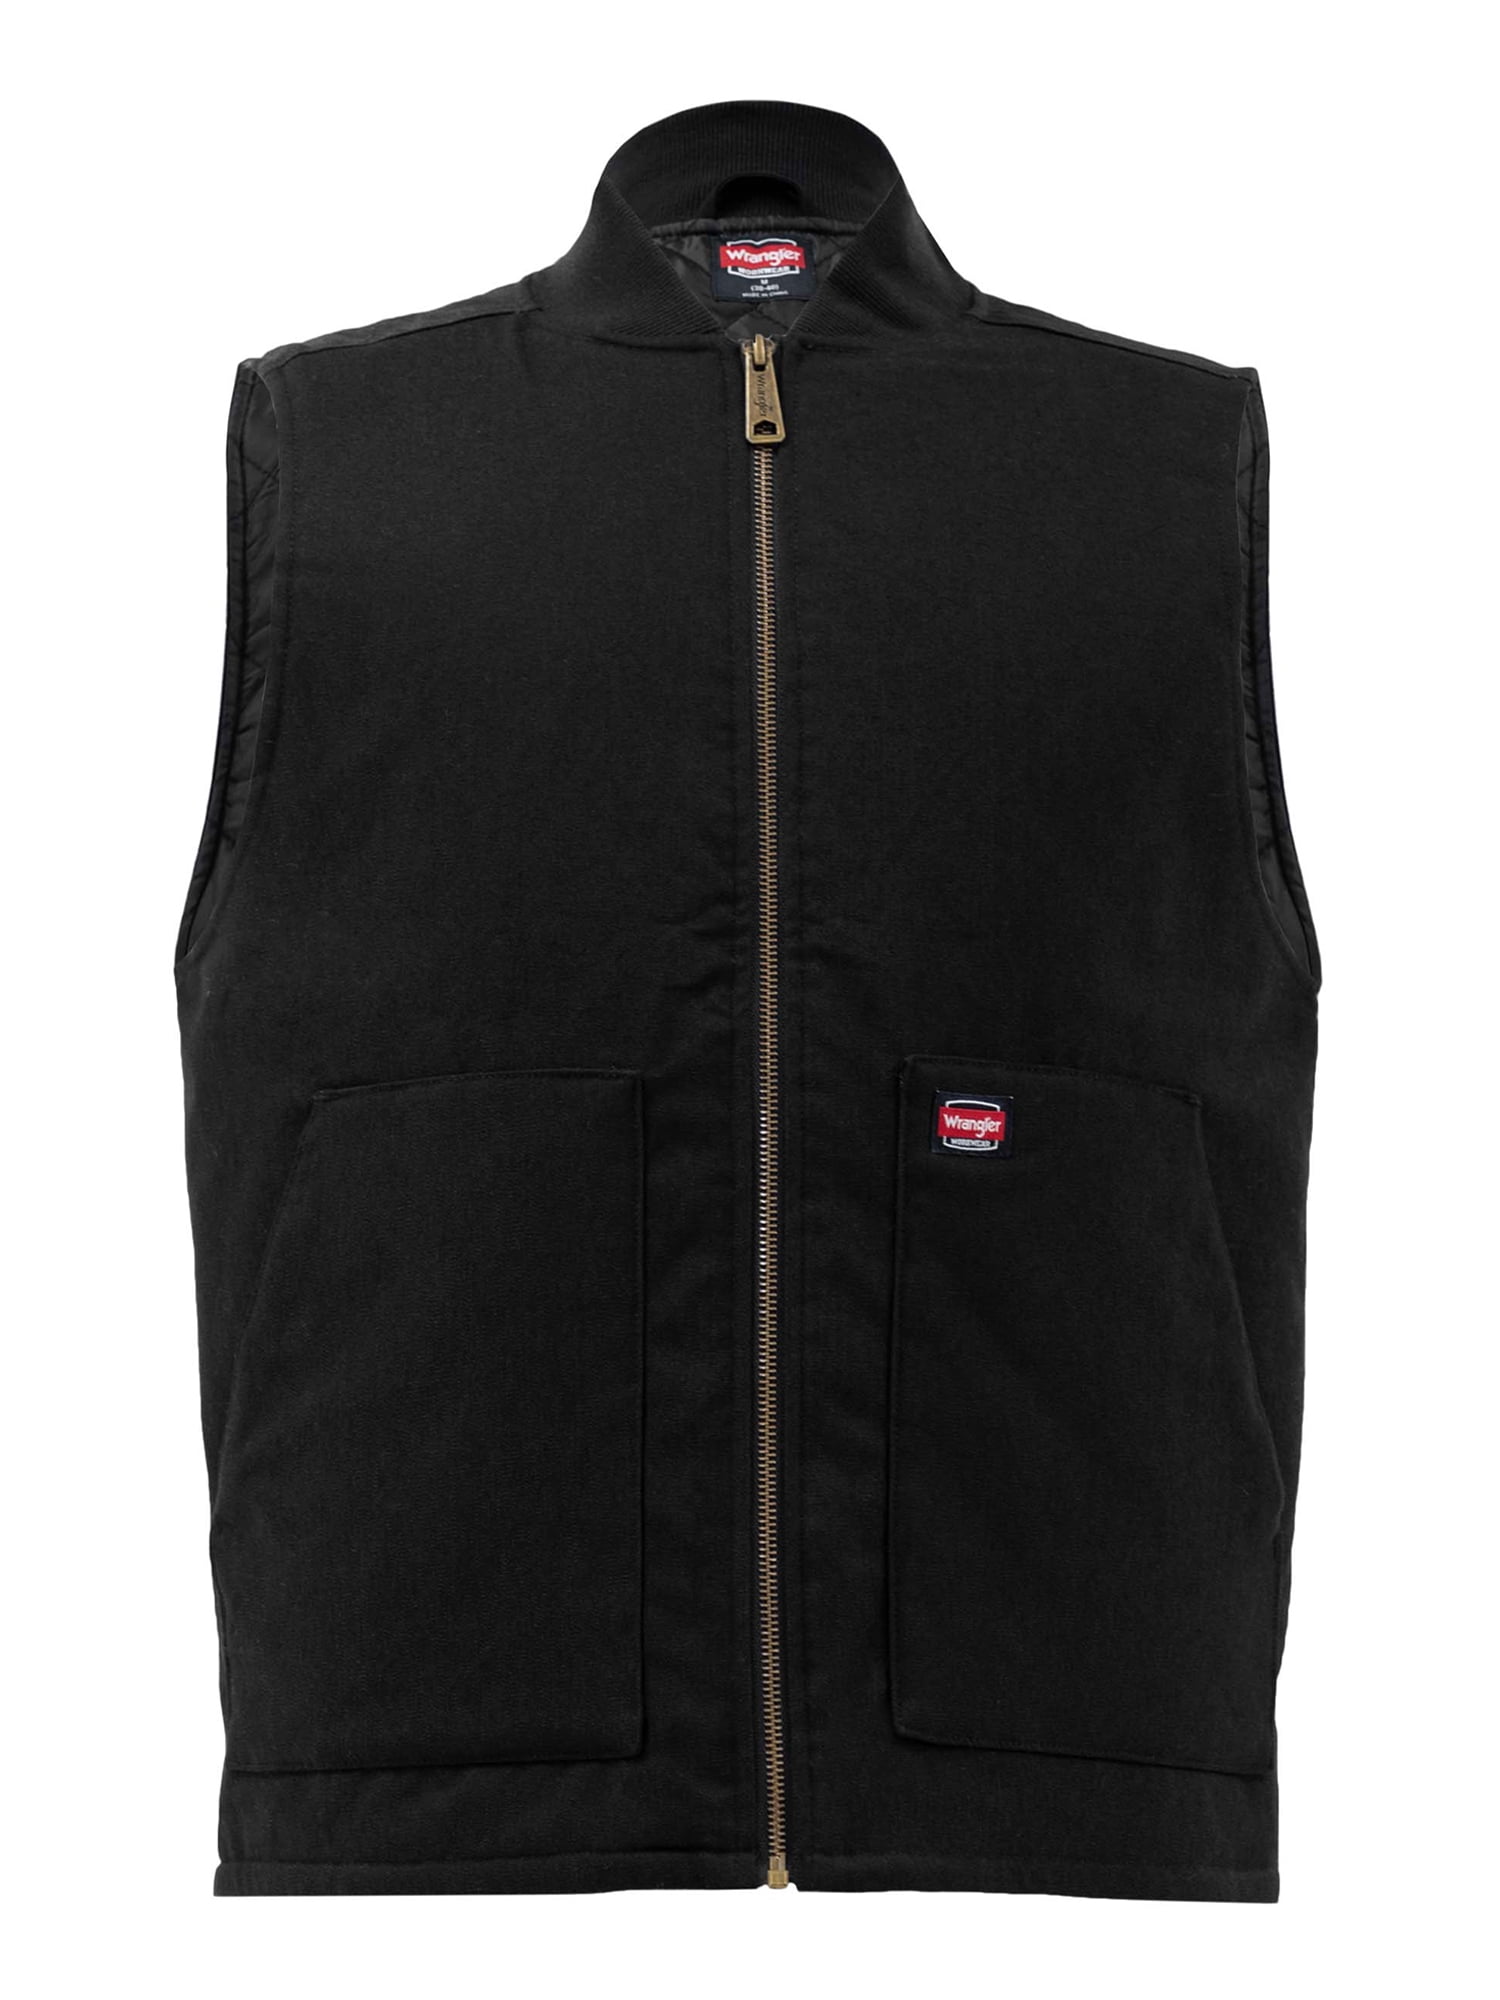 Wrangler Workwear Men's Quilted Lined Vest 